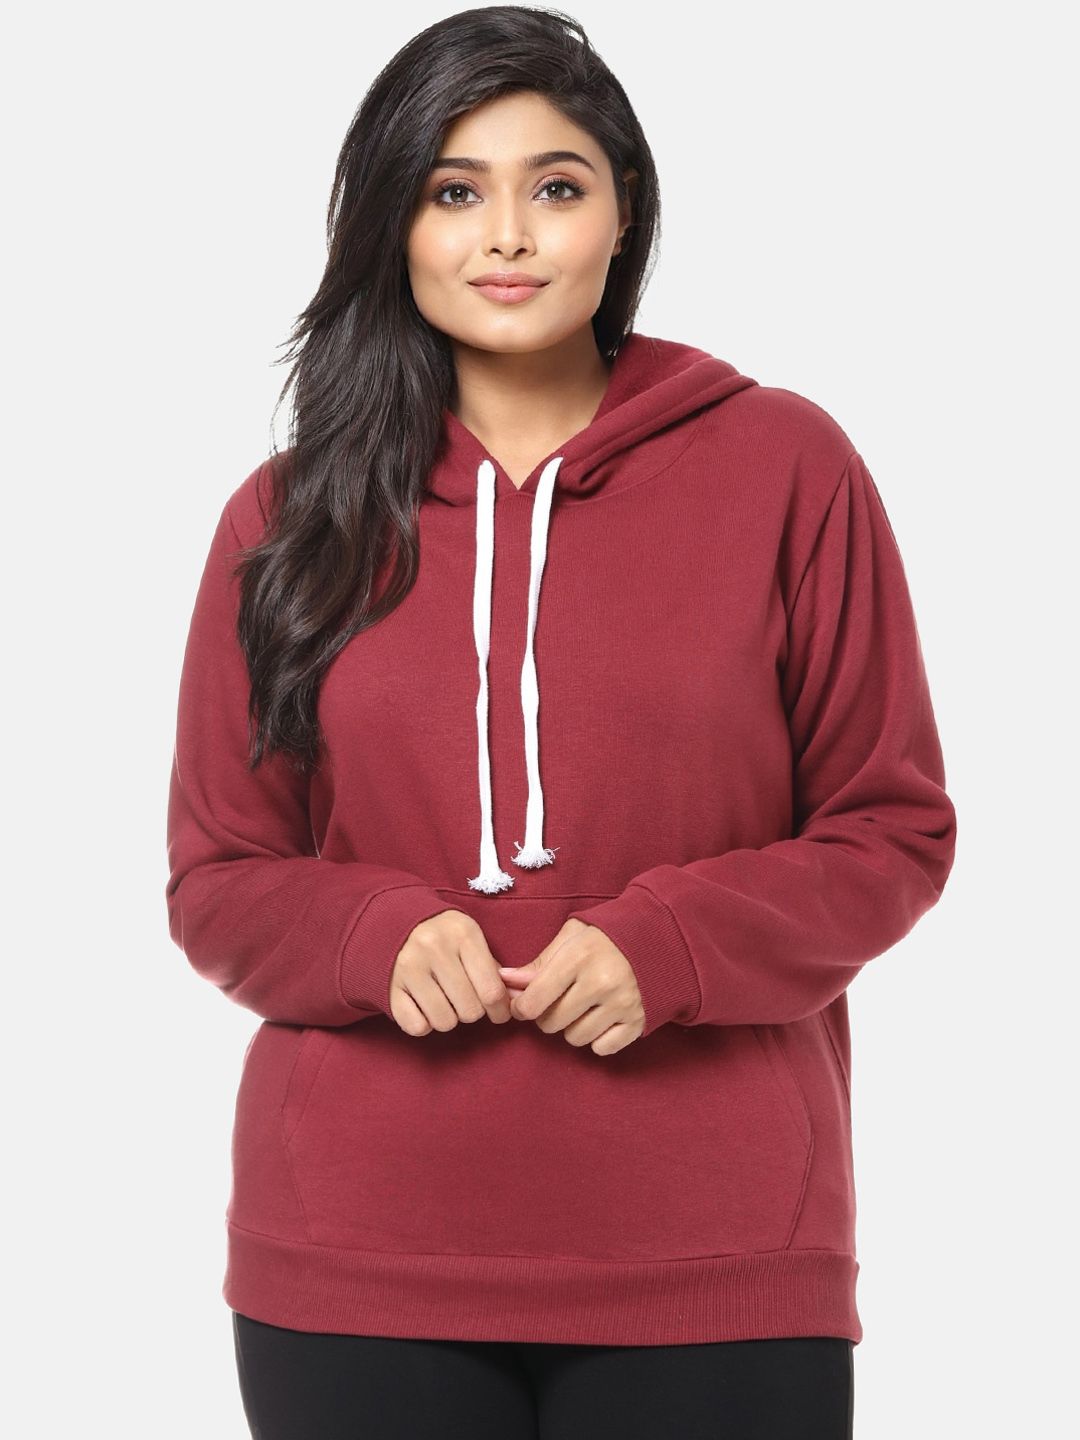 Instafab Plus Women Maroon Solid Hooded Sweatshirt Price in India